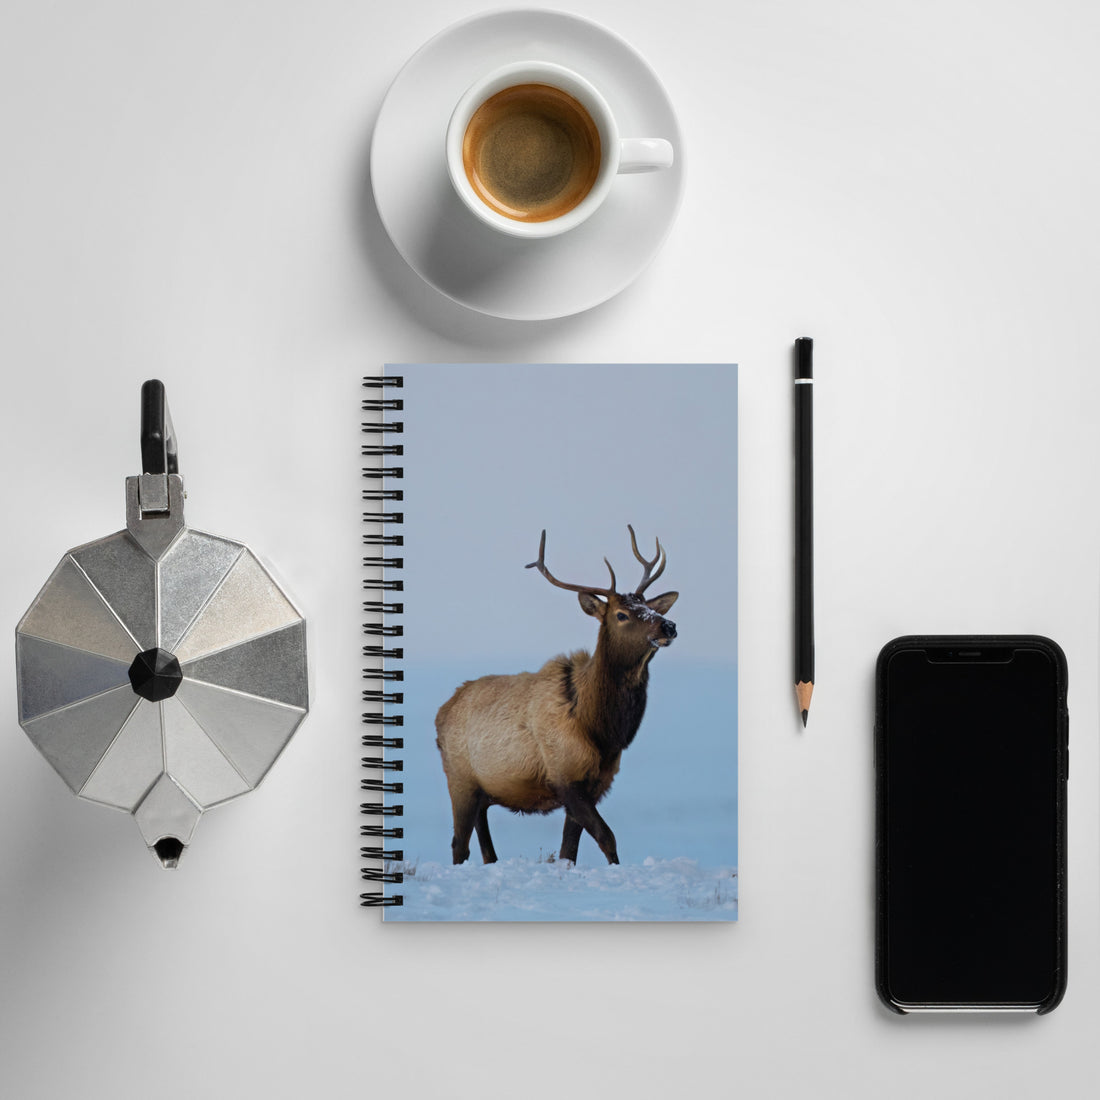 Elk Spiral notebook